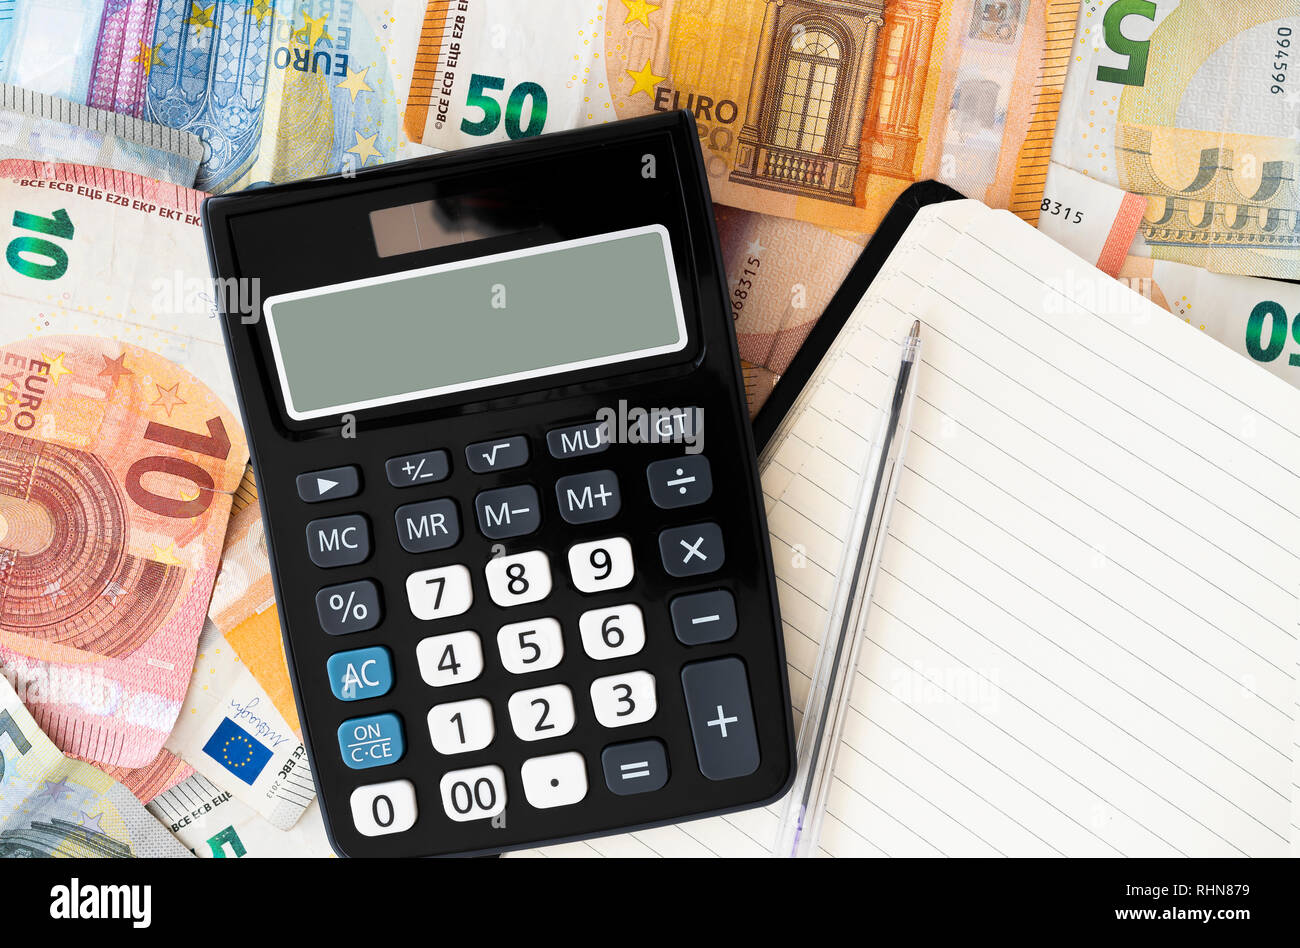 Calculadora de bolsillo con billetes y monedas de euro en segundo plano. Foto de stock